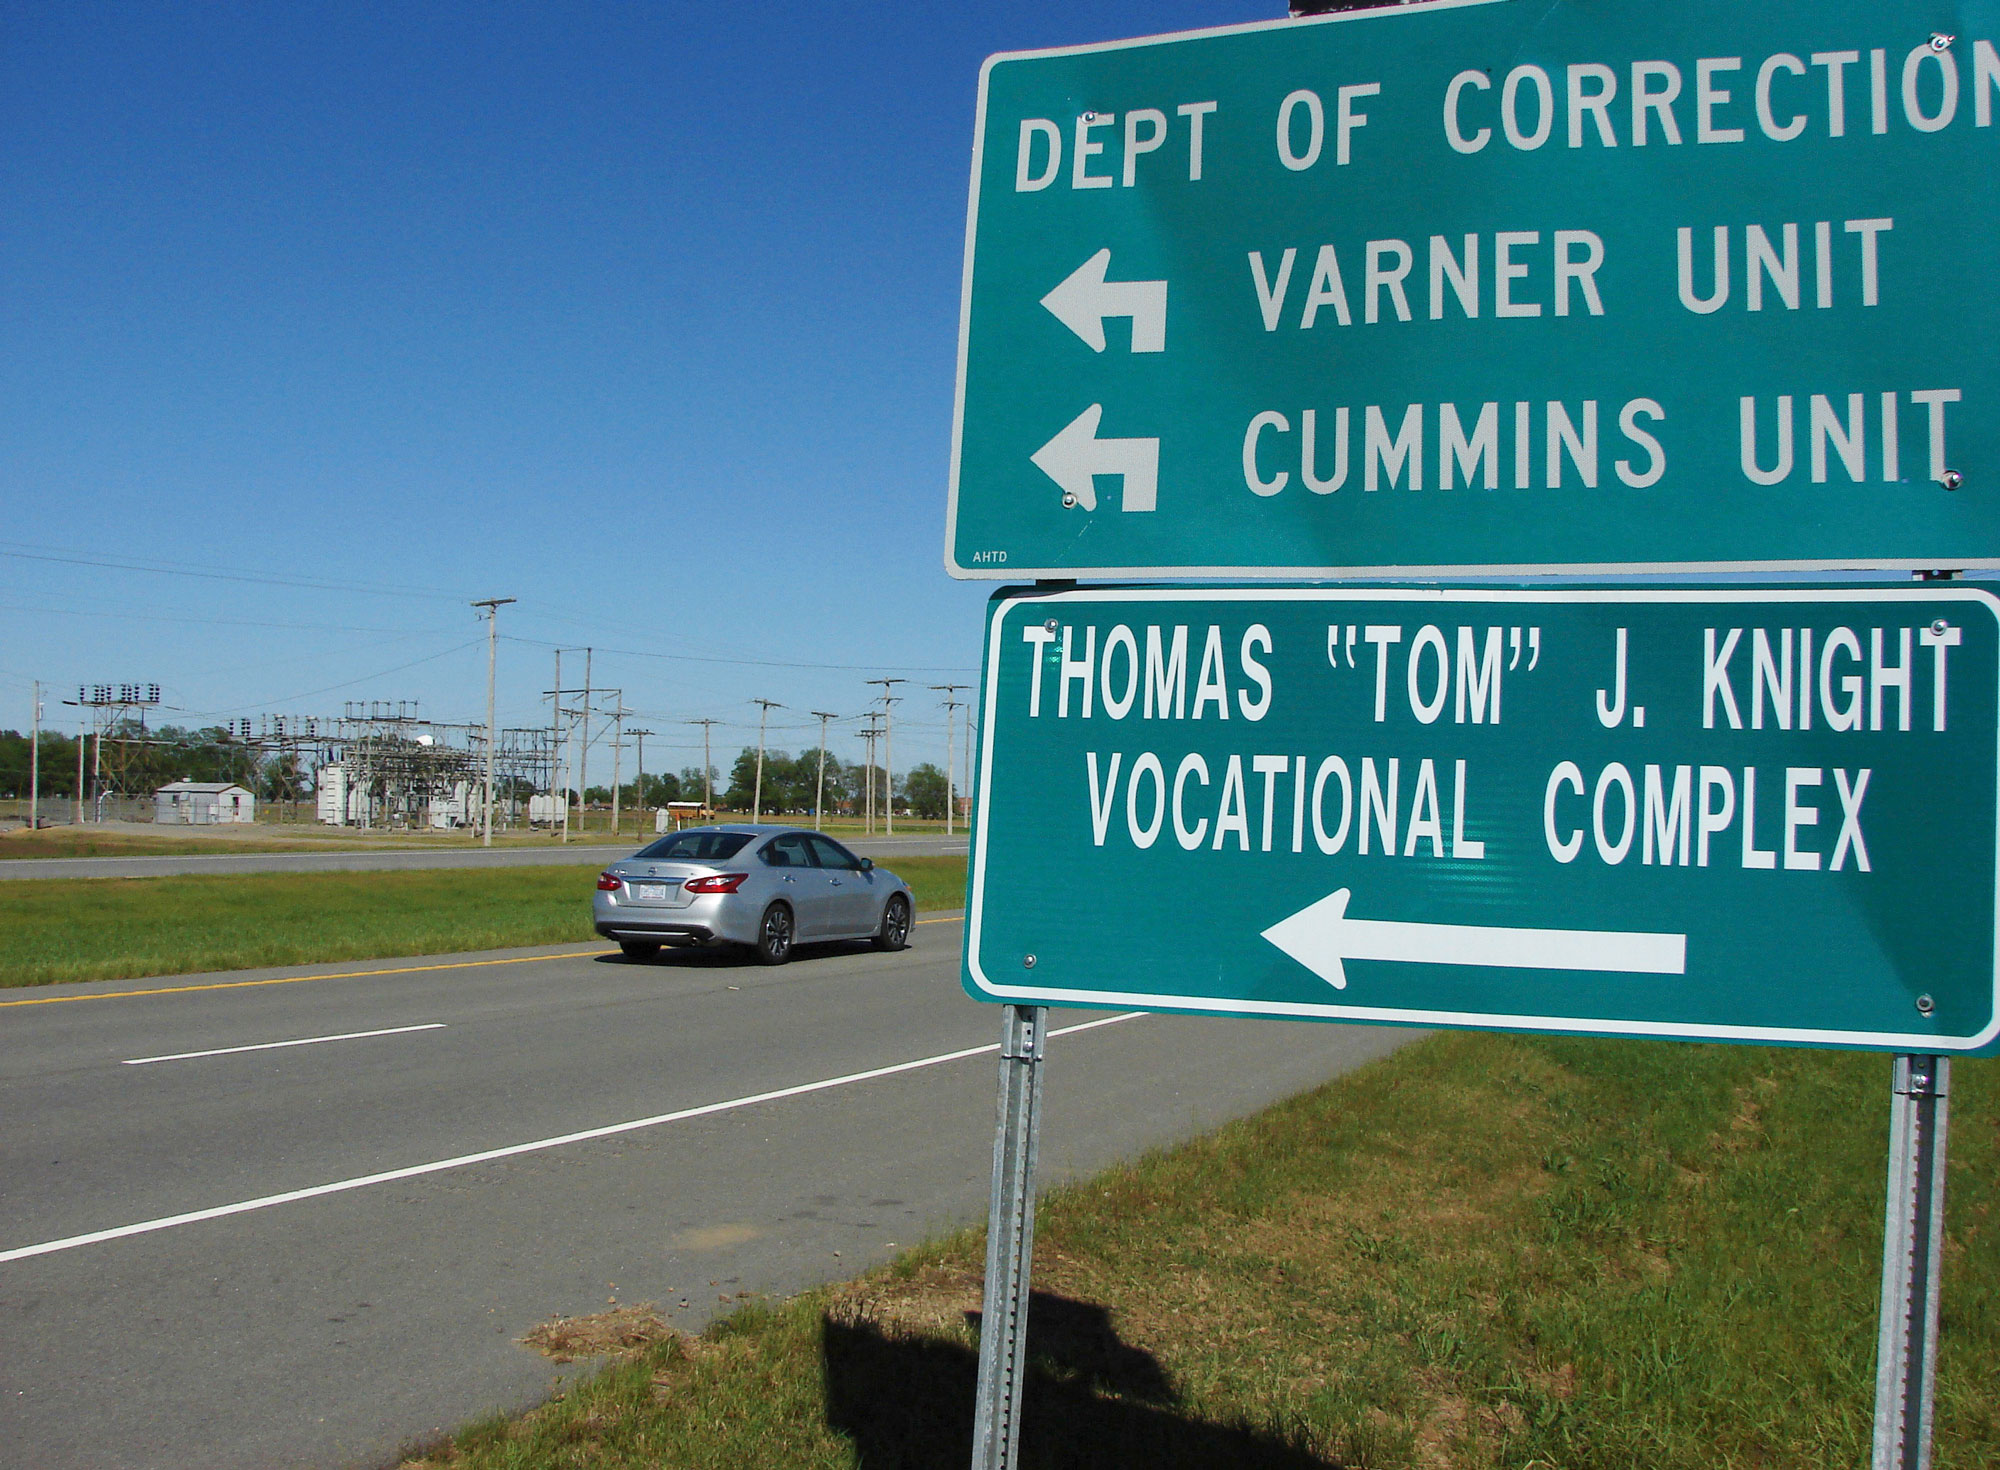 A motorist passes by the entrance to the Cummins Unit prison near Varner, Arkansas, on April 27, 2017.